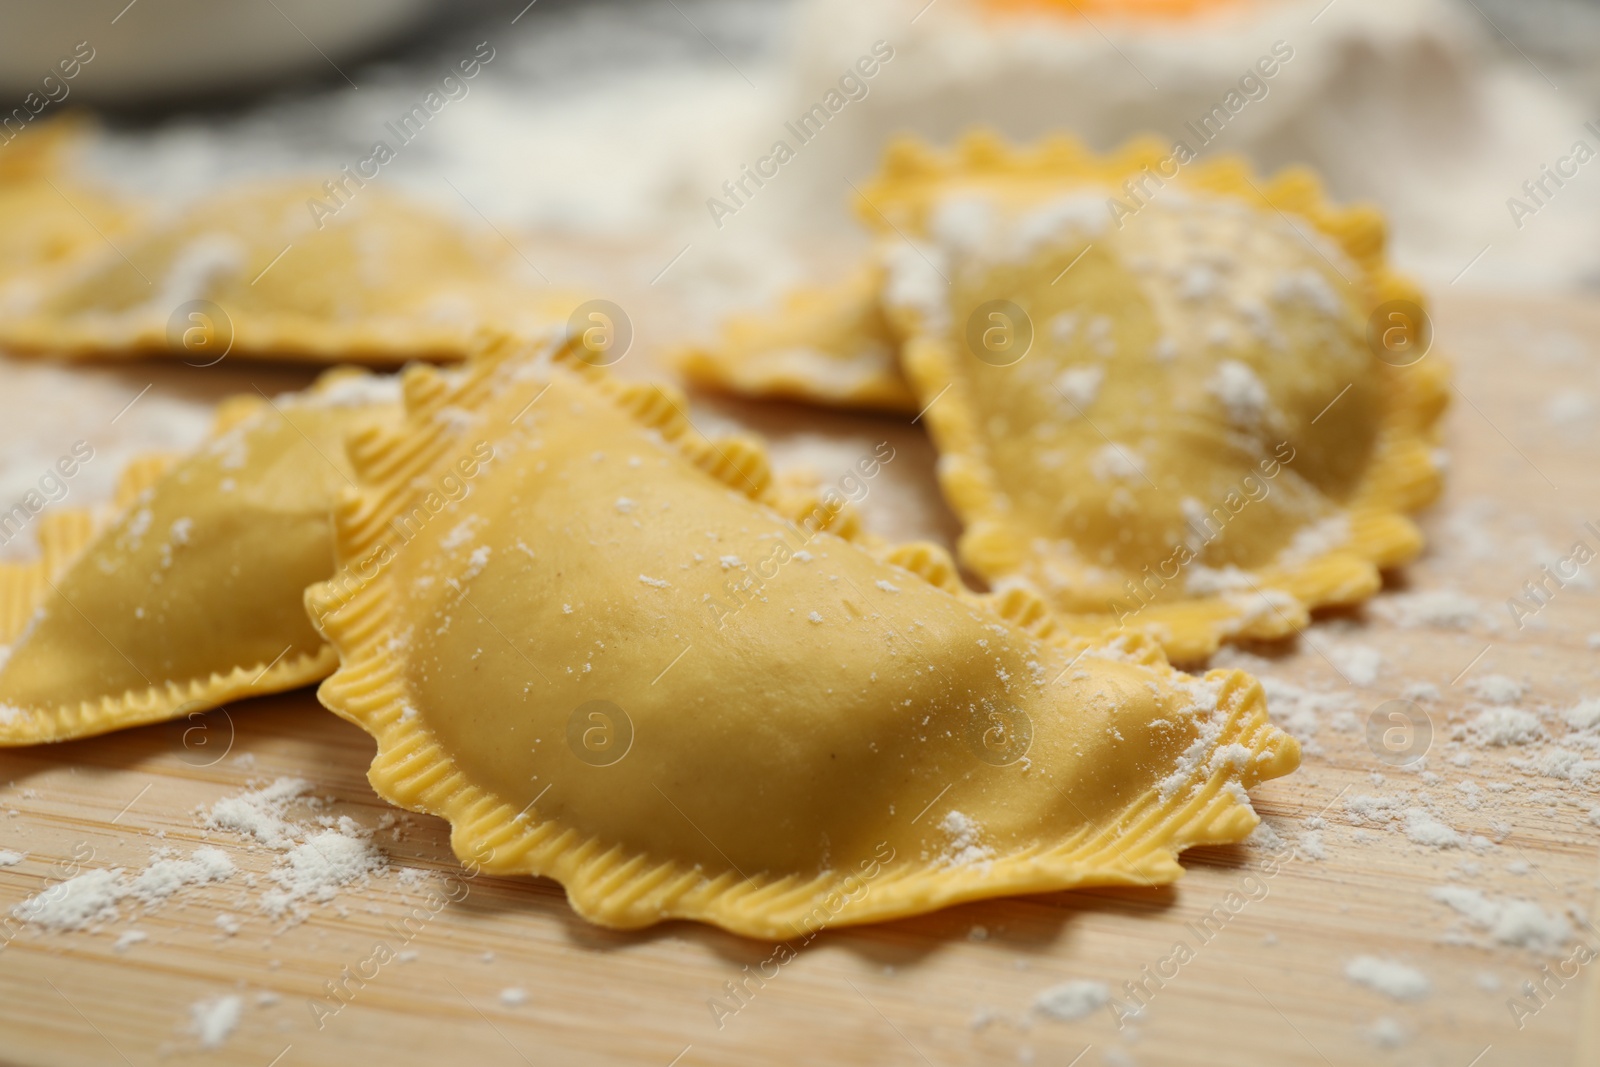 Photo of Raw ravioli on wooden board, closeup view. Italian pasta